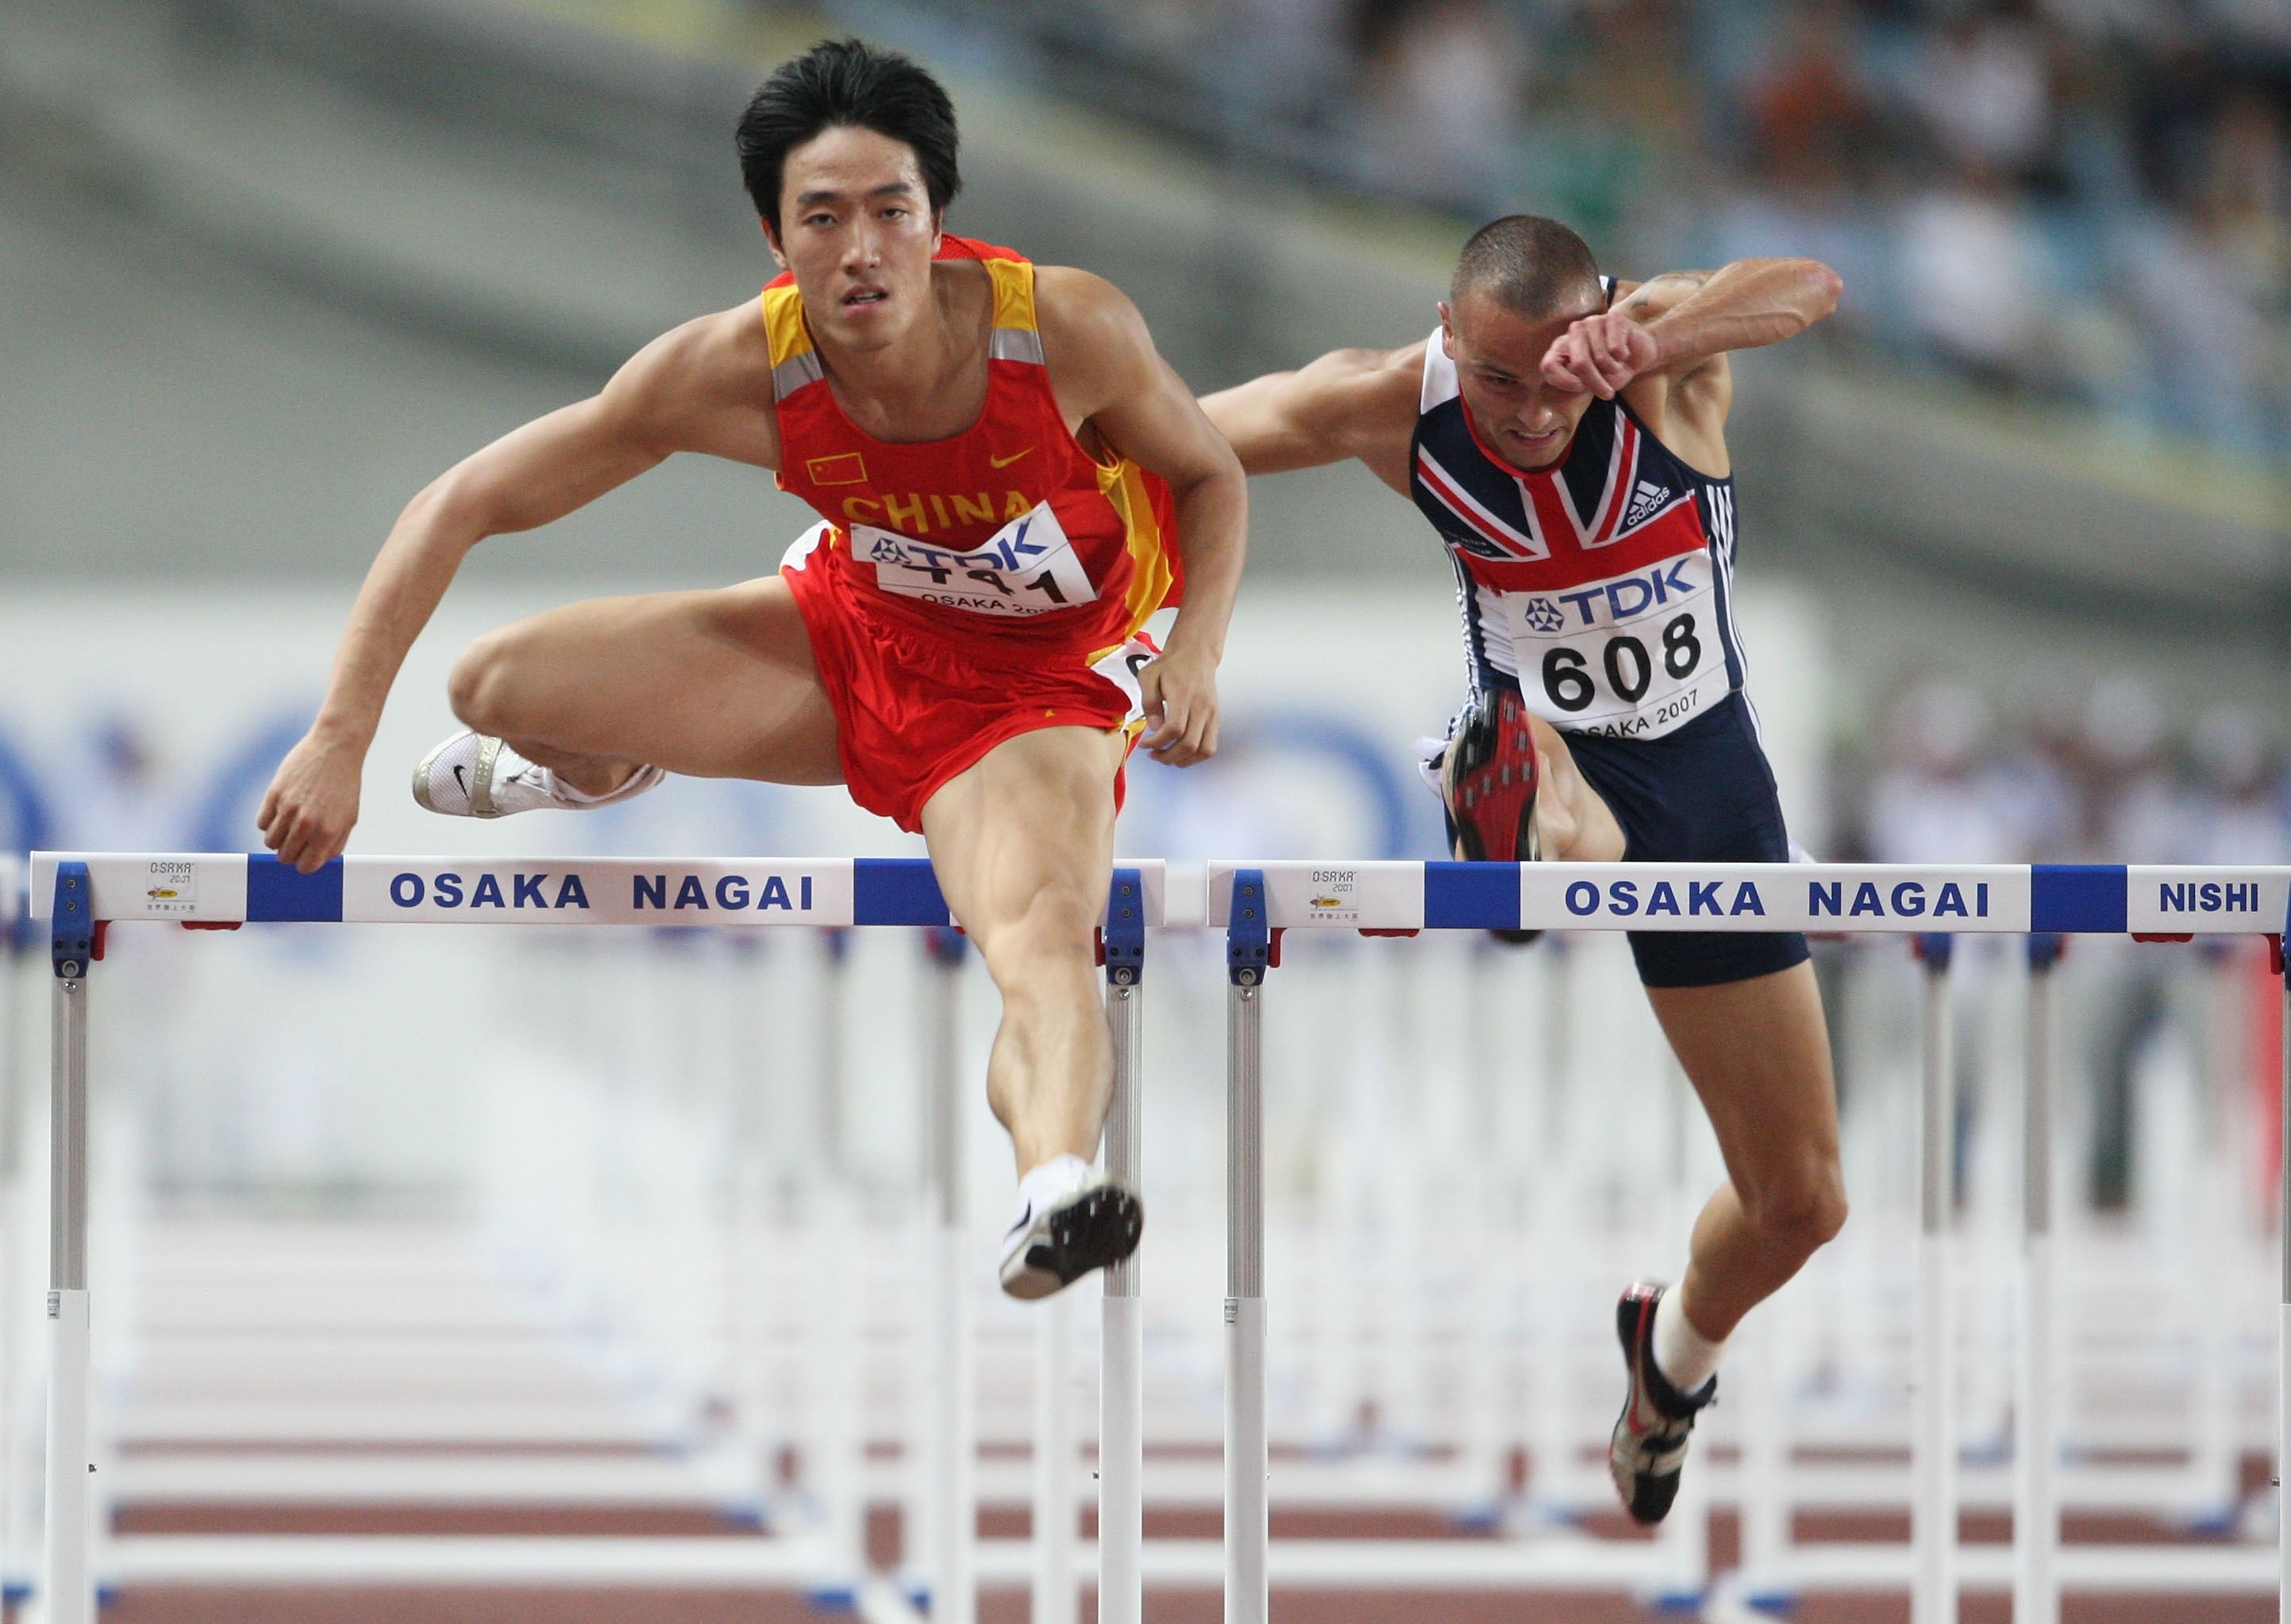 Liu Xiang in action at the 2007 World Championships in Osaka